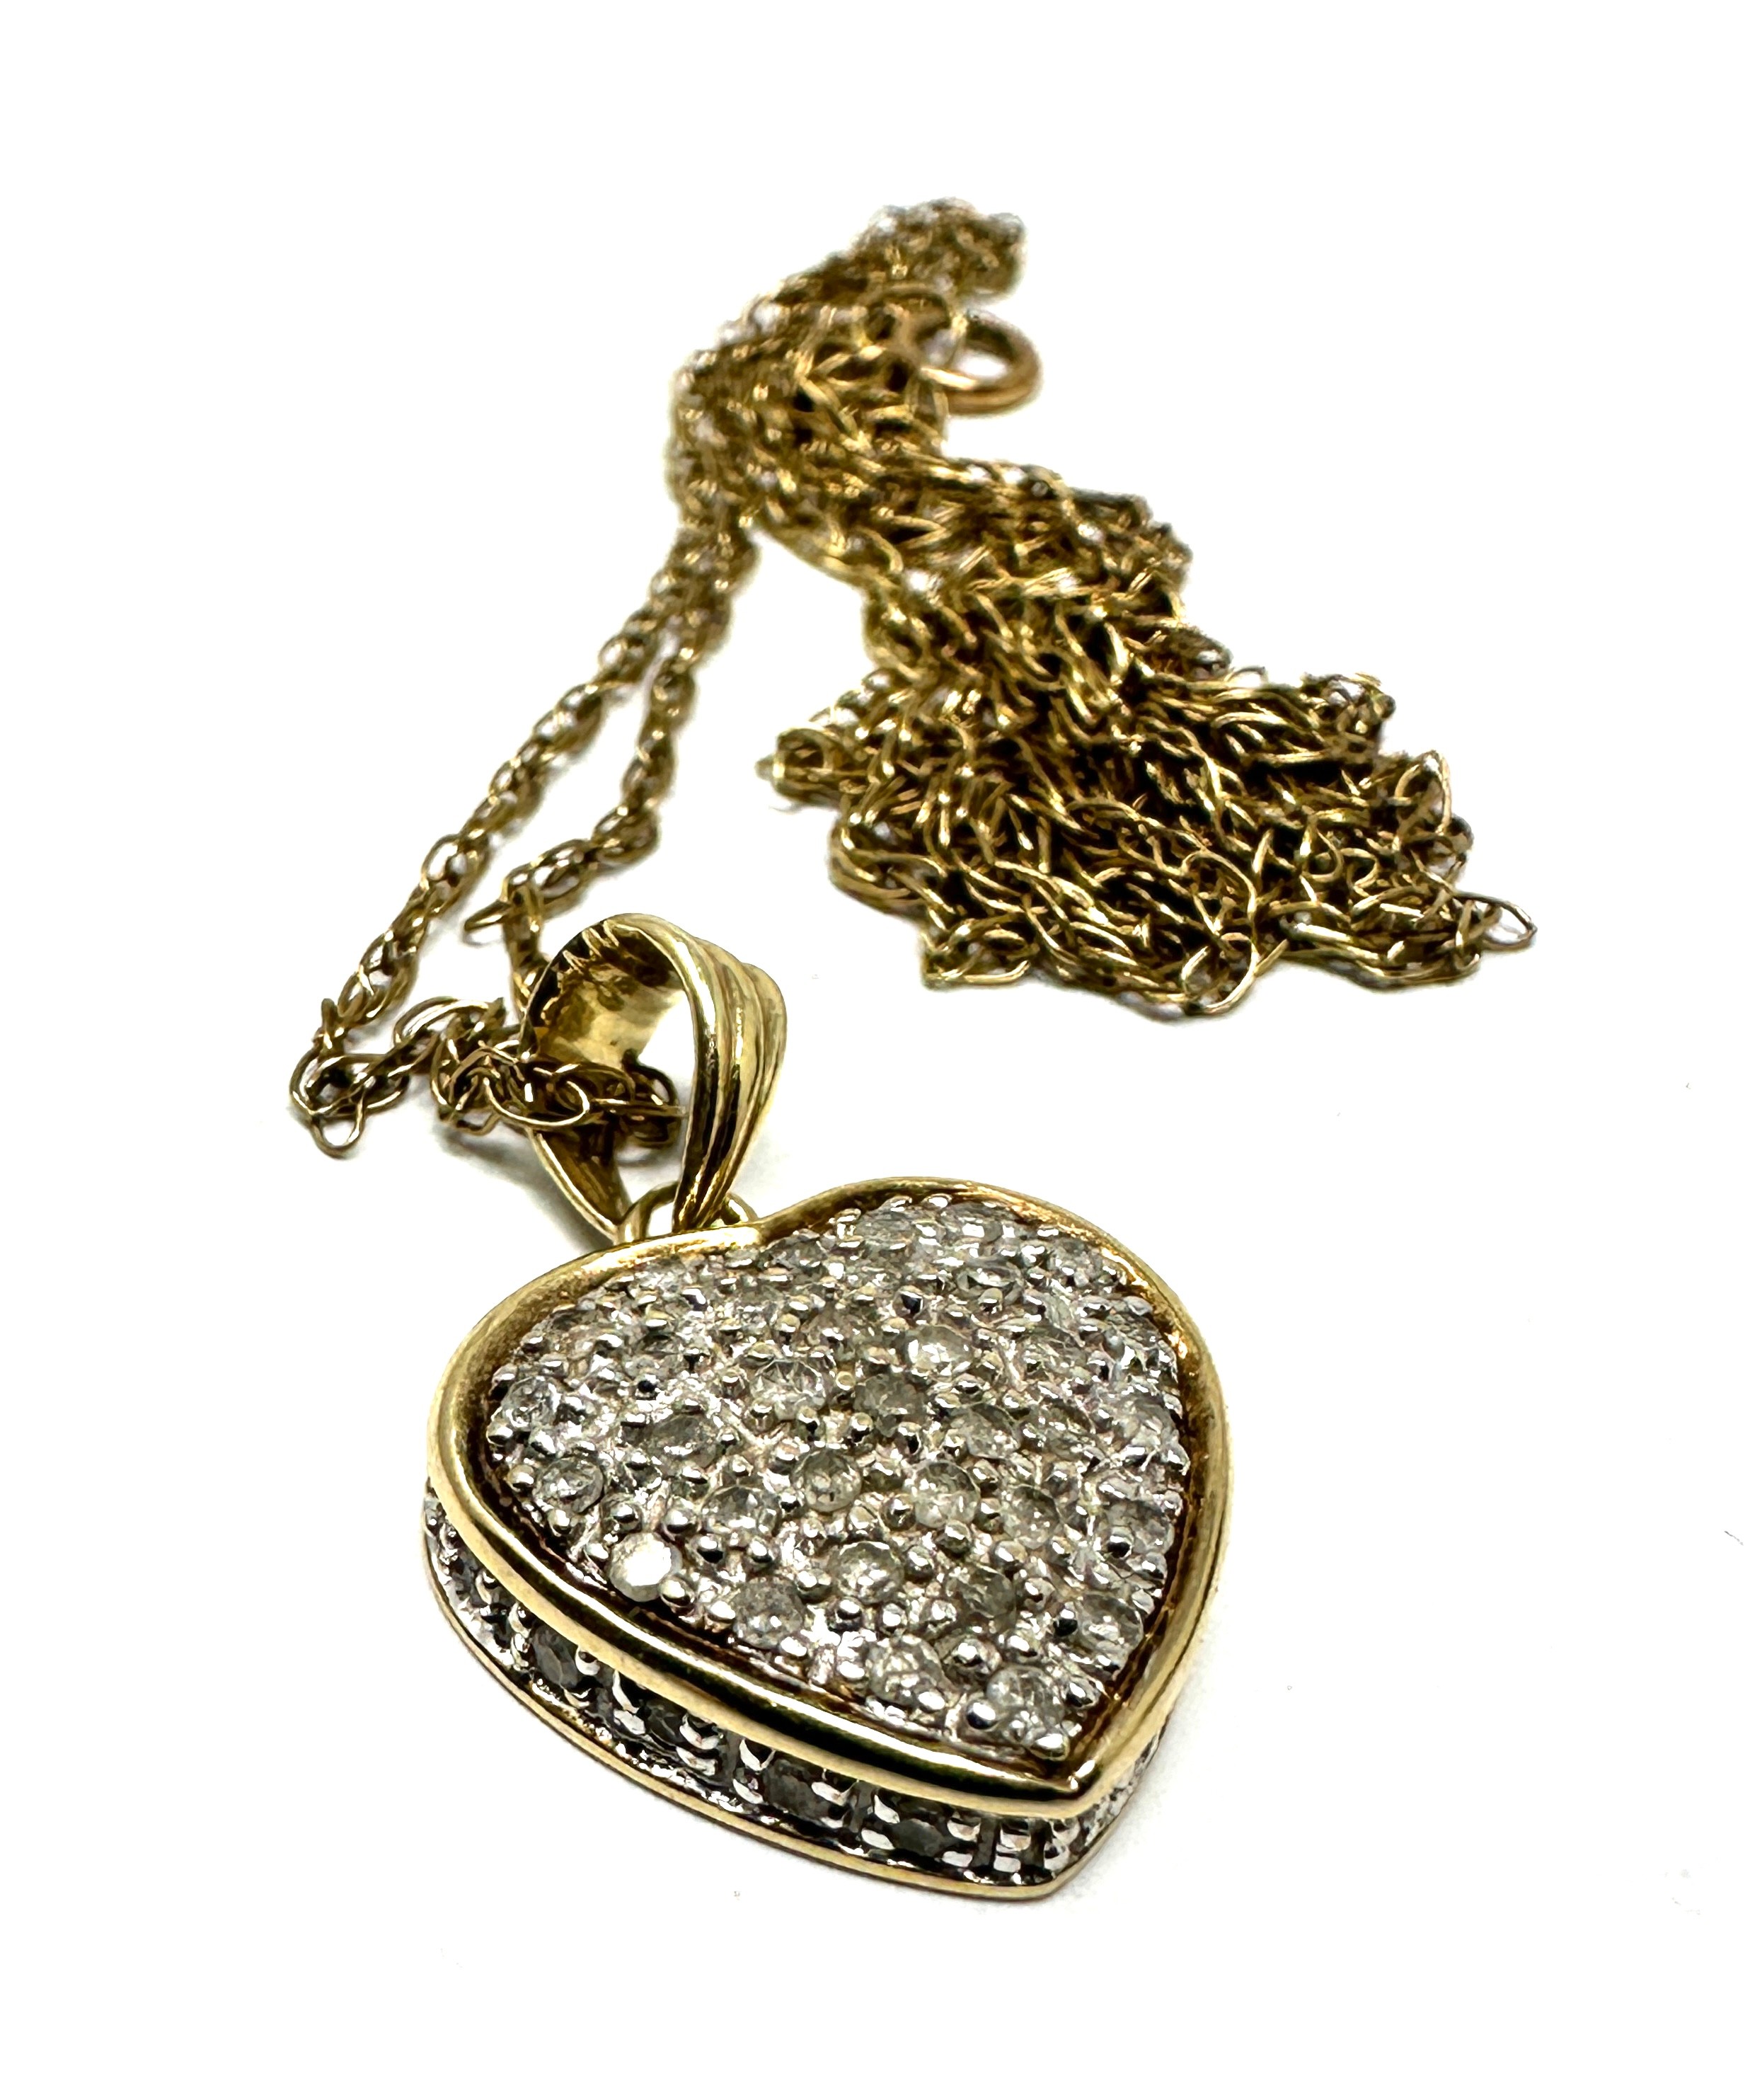 9ct gold diamond heart shaped pendant & chain (4.6g)